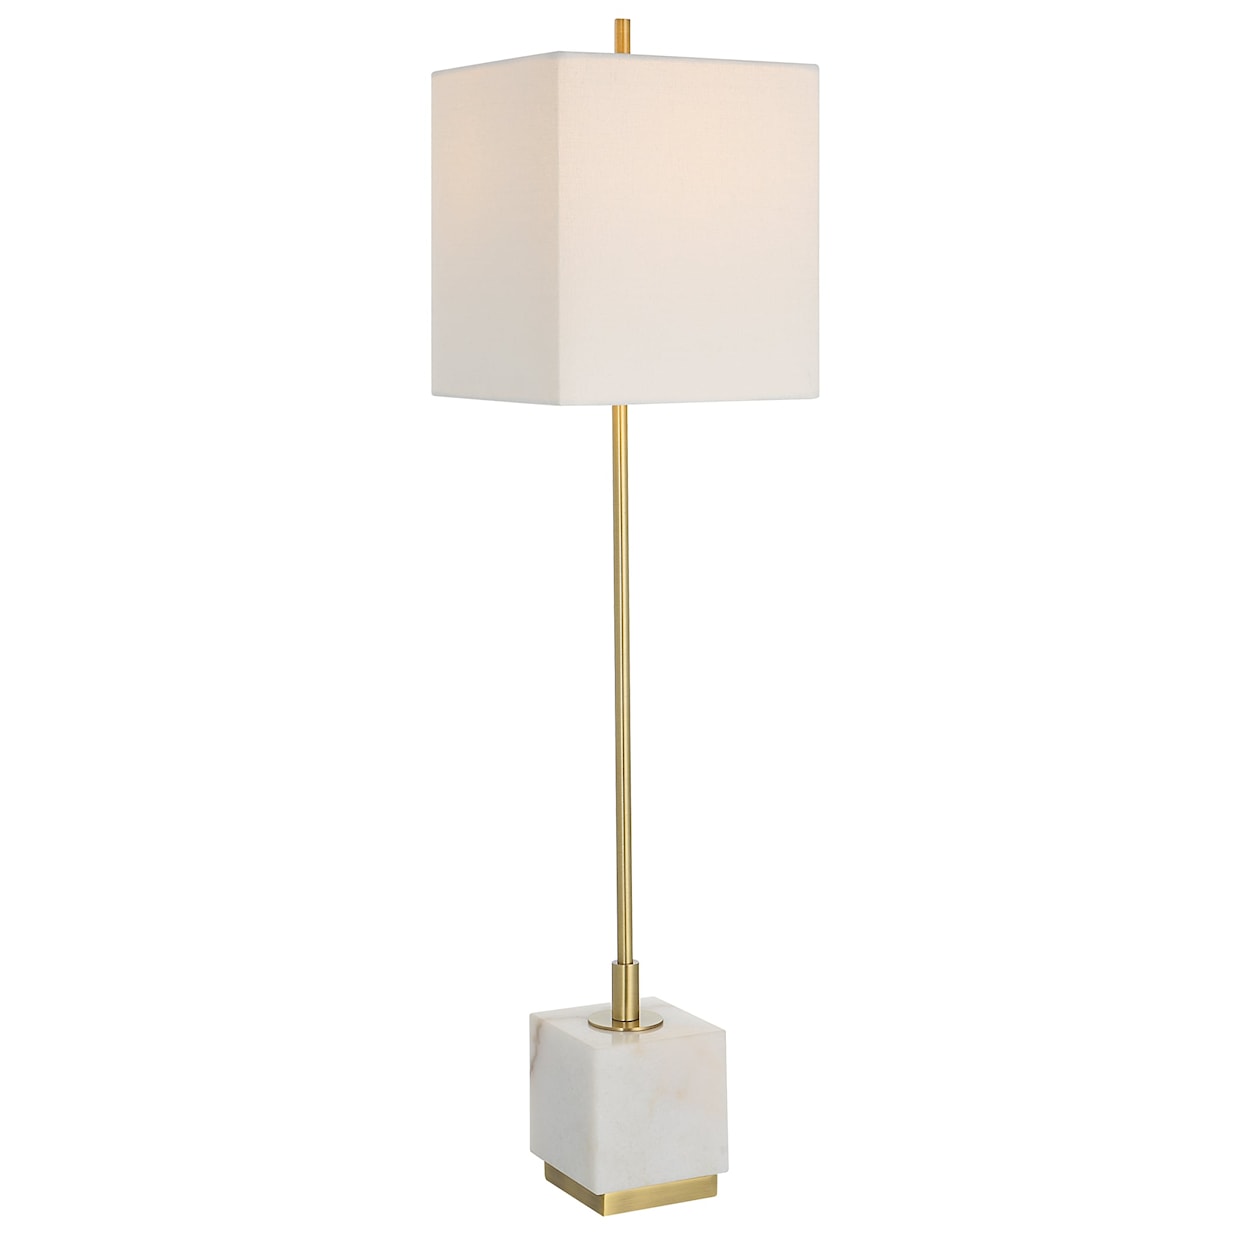 Uttermost Escort Brass Buffet Lamp with a Marble Block Foot